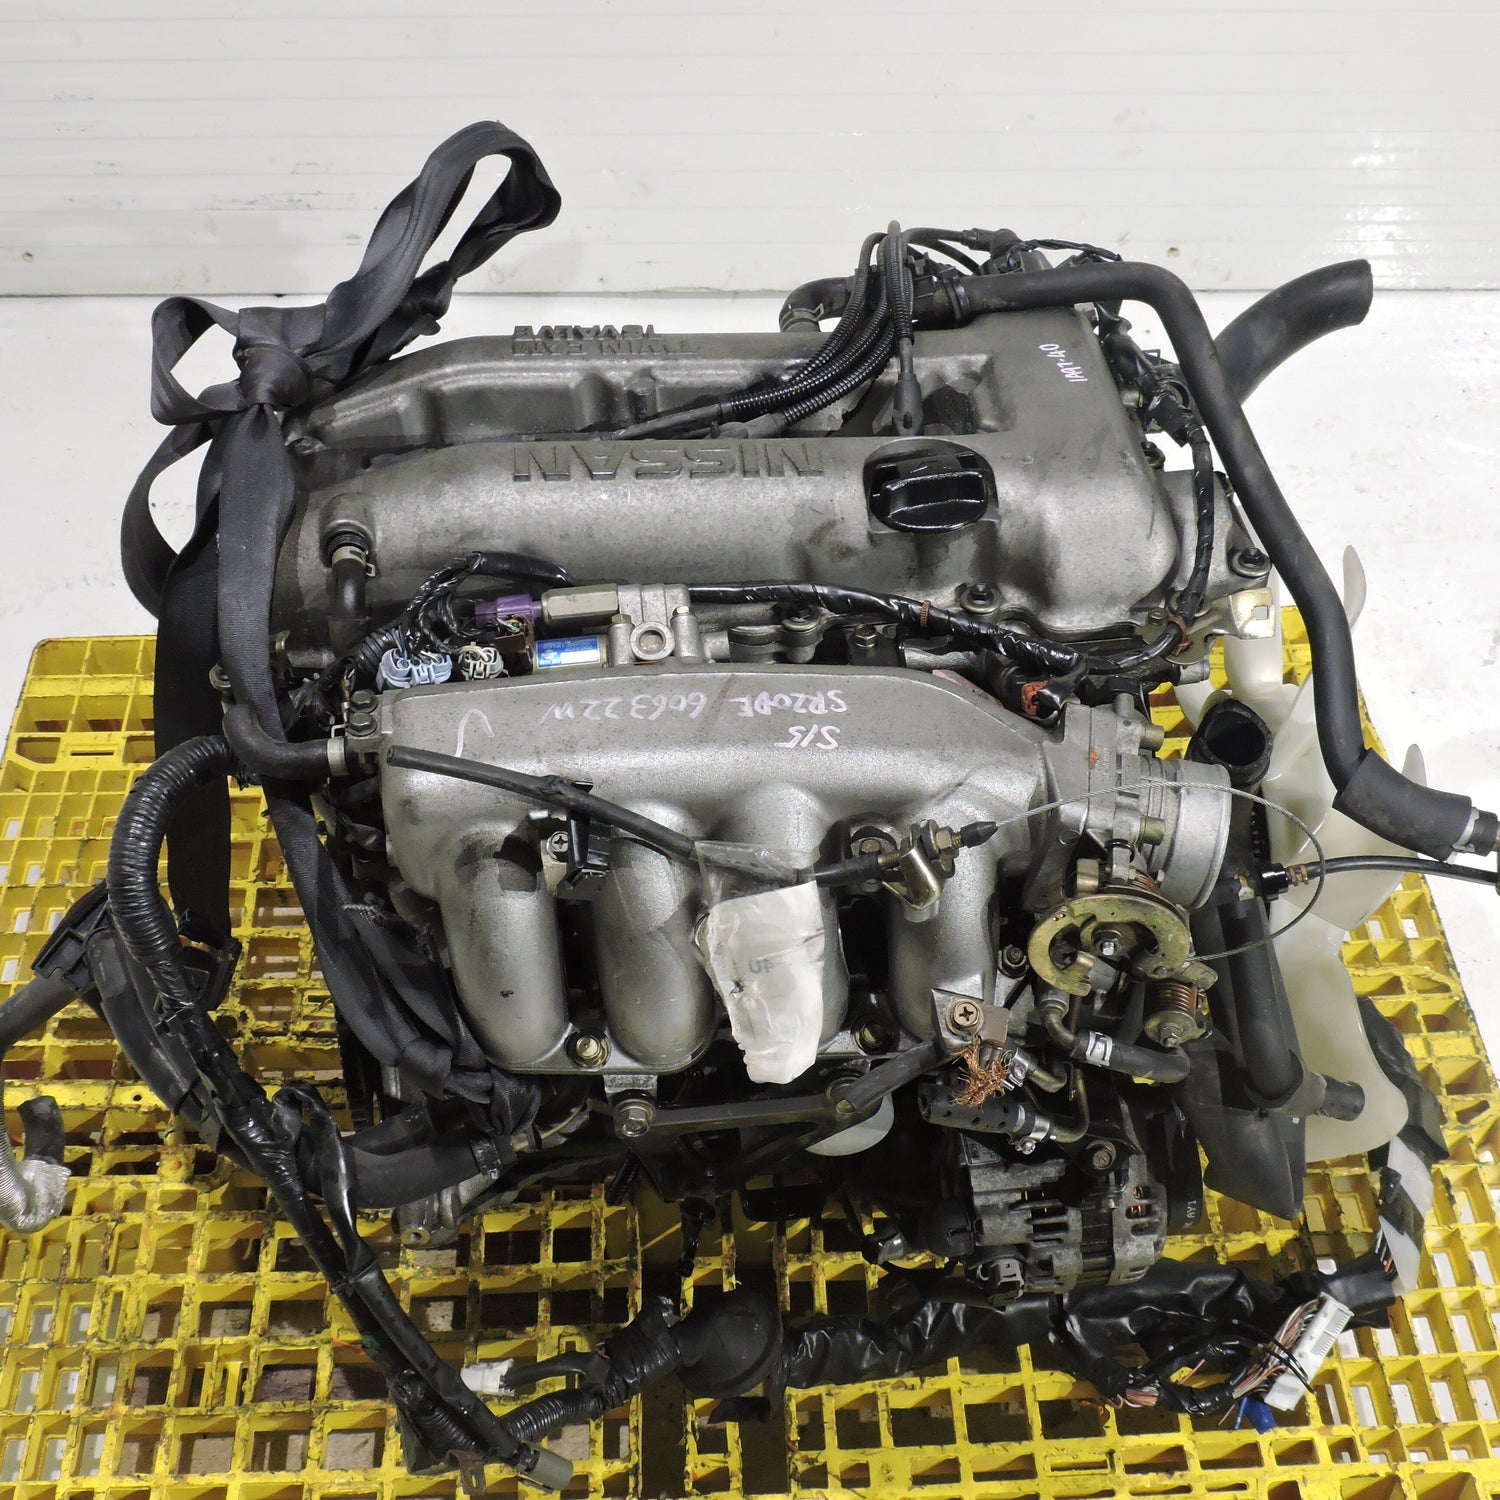 Nissan Silvia S14 S15 2.0l Rwd Non-Turbo JDM Engine - SR20DE